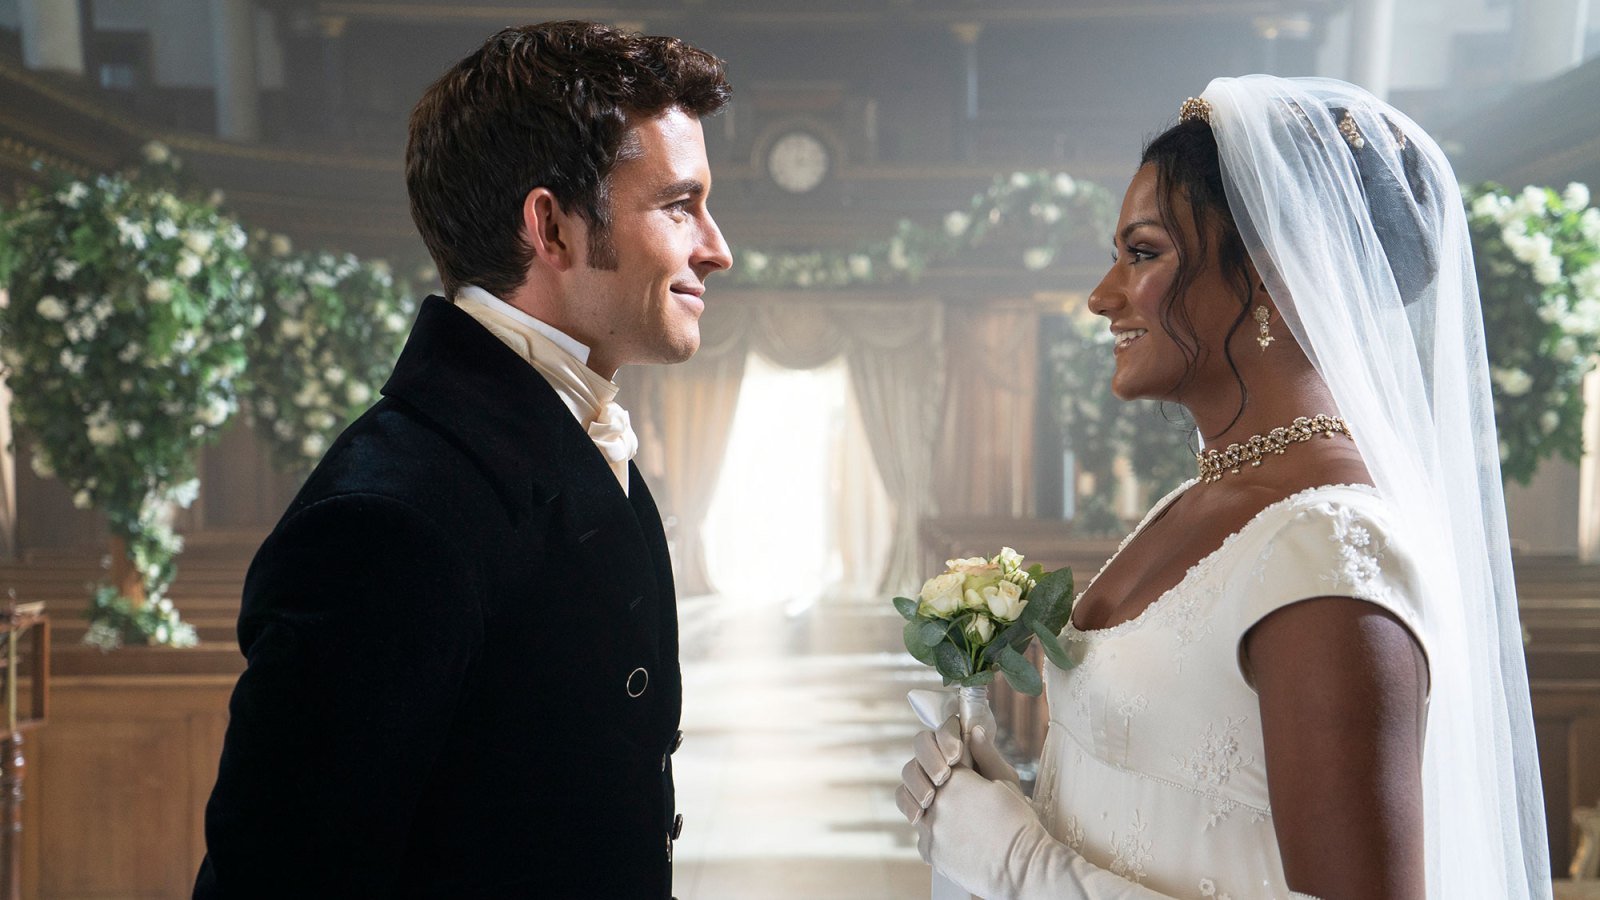 Bridgerton Director Cheryl Dunye Explains Why Season 2 Didn't Show Kate and Anthony’s Wedding